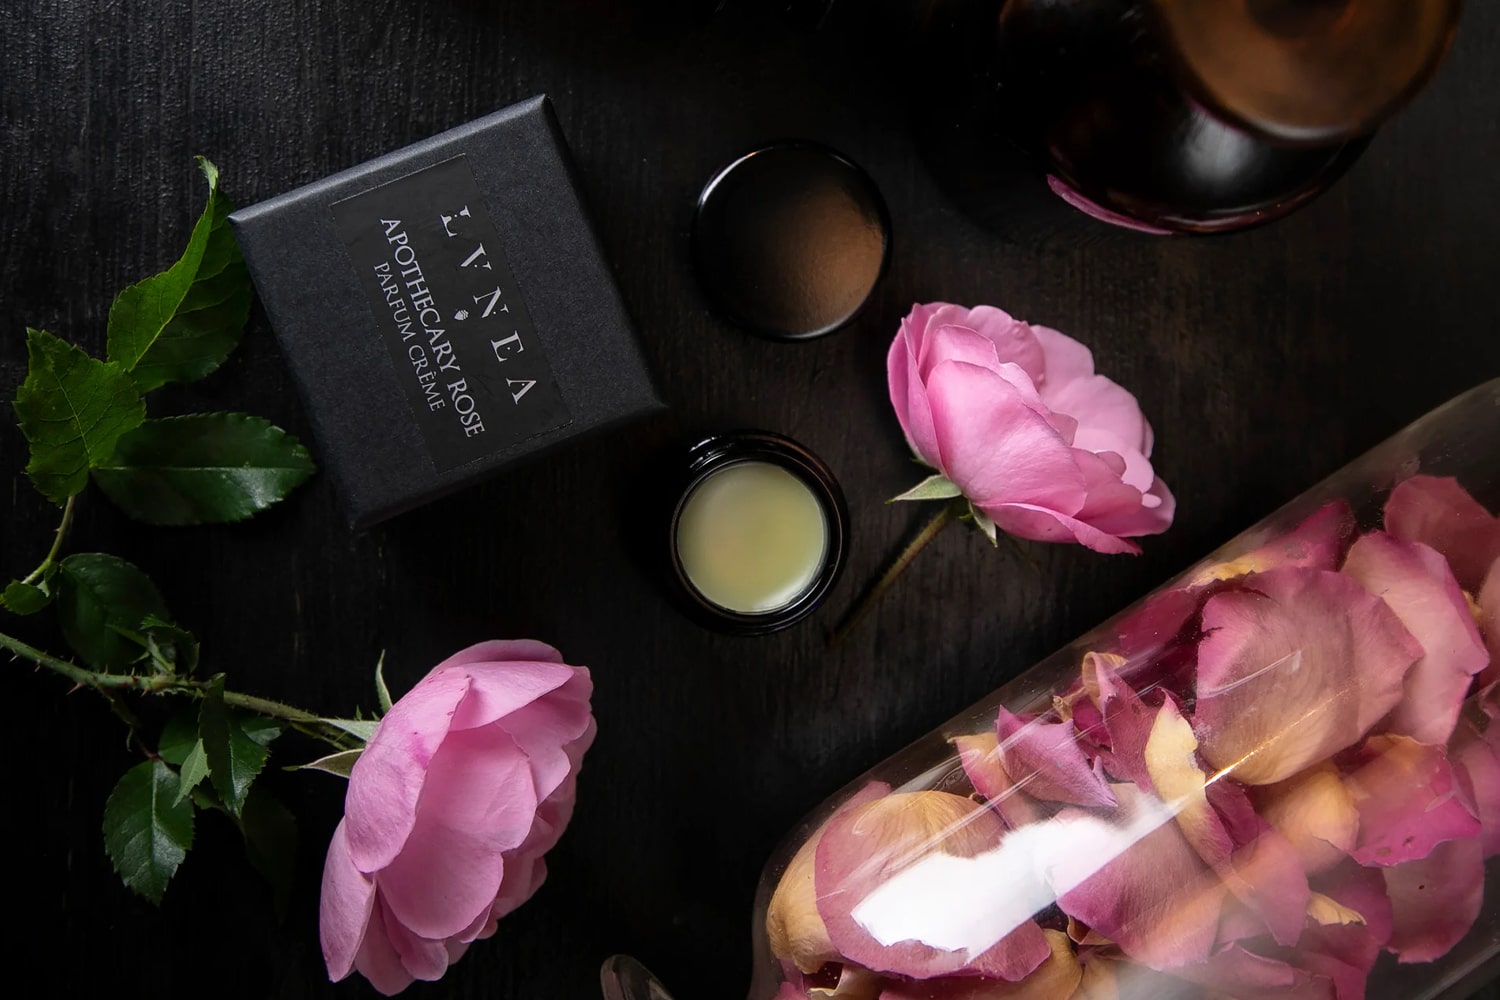 Lvnea Perfume // Natural and Botanical Perfume